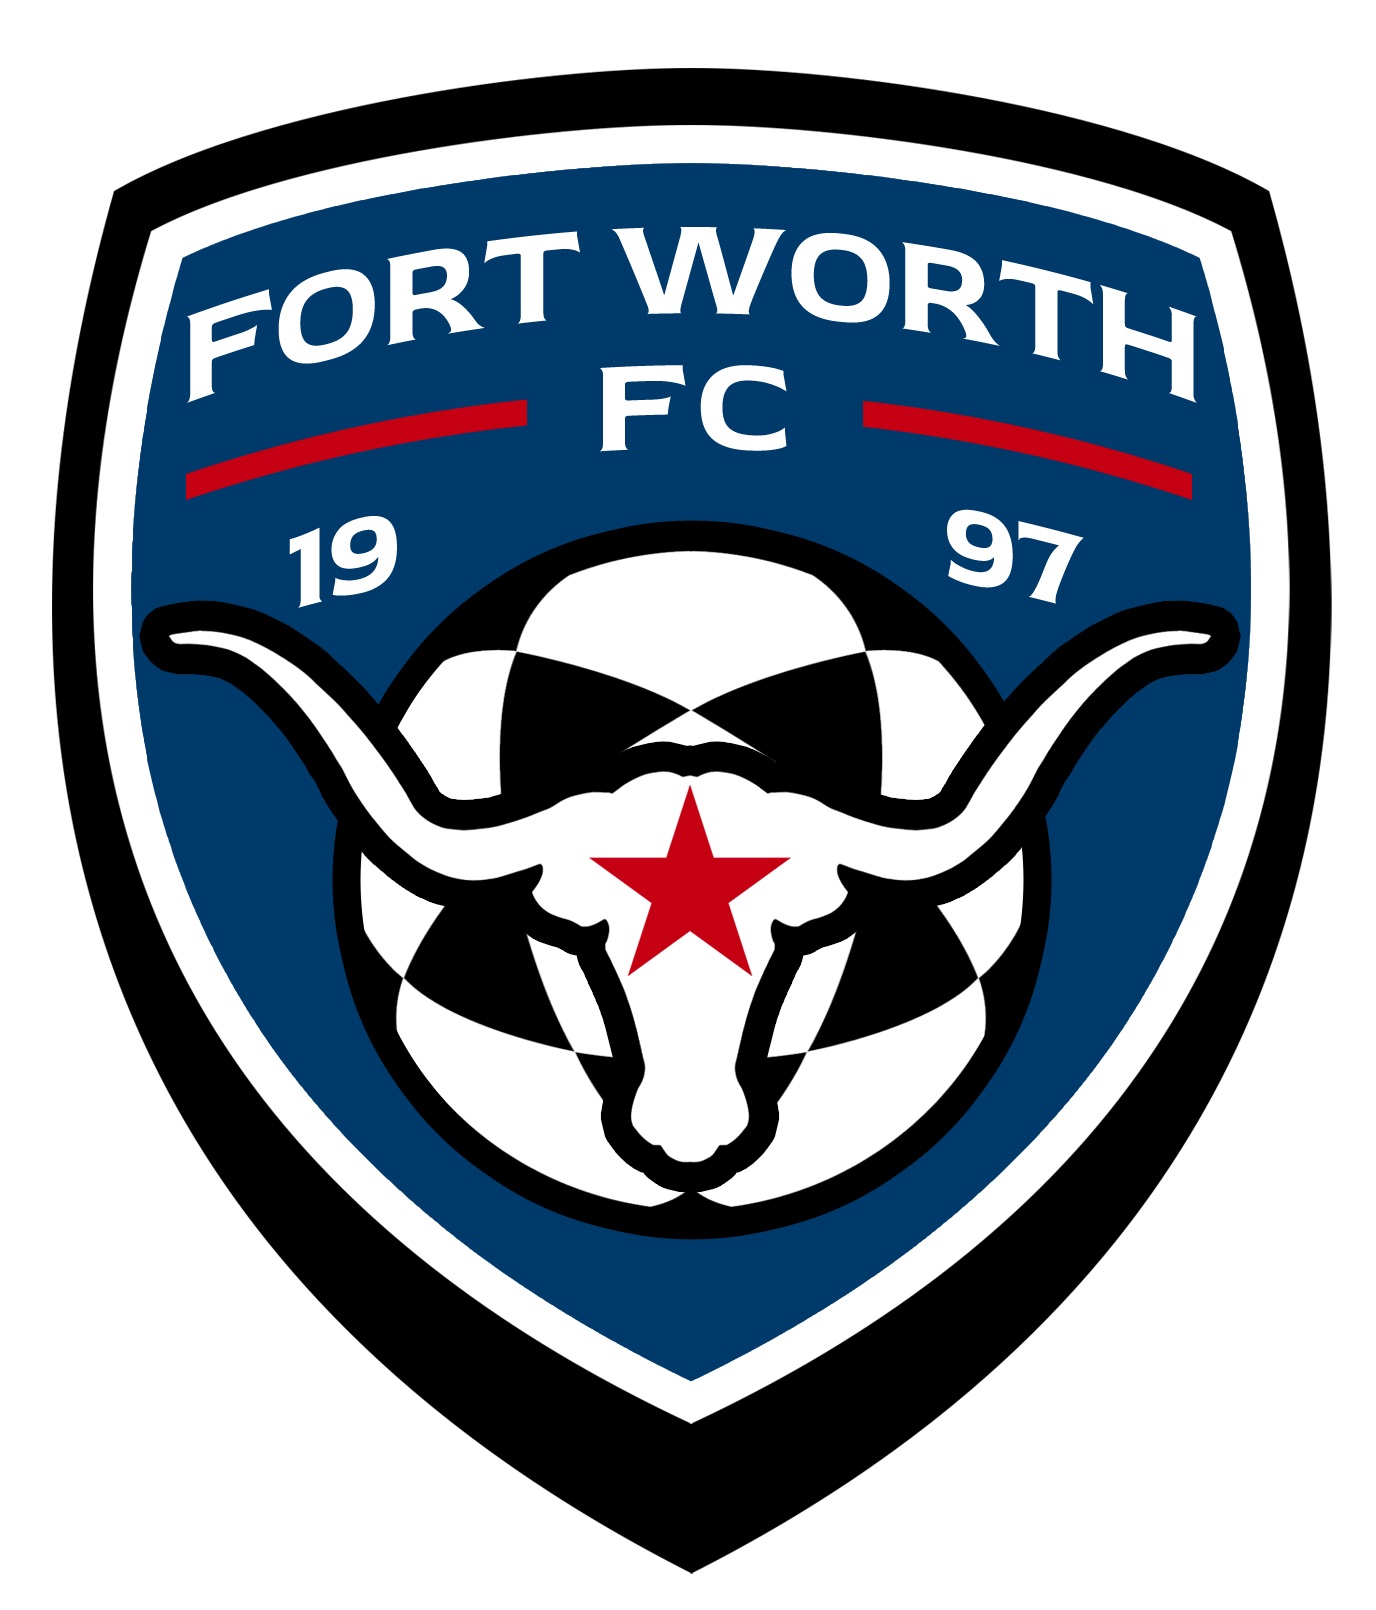 Fort Worth FC team badge